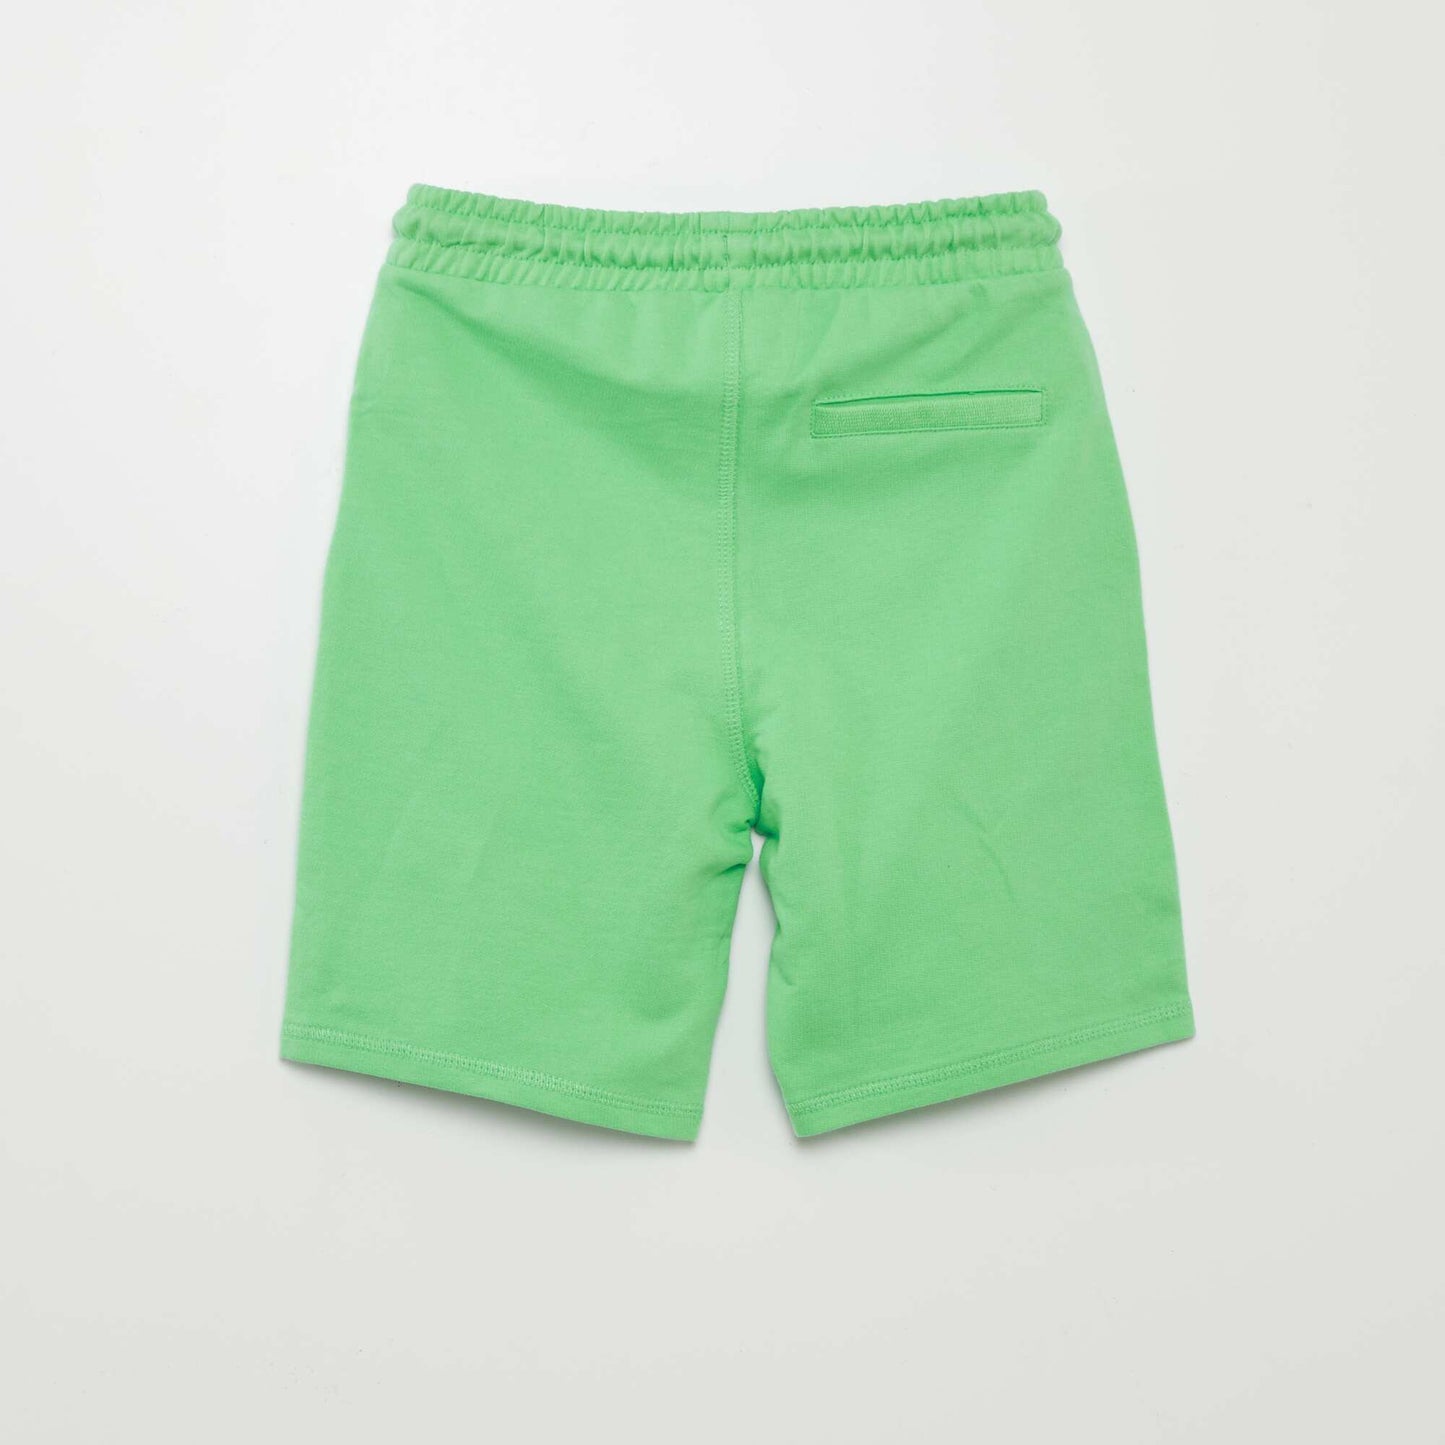 Sweatshirt fabric shorts GREEN